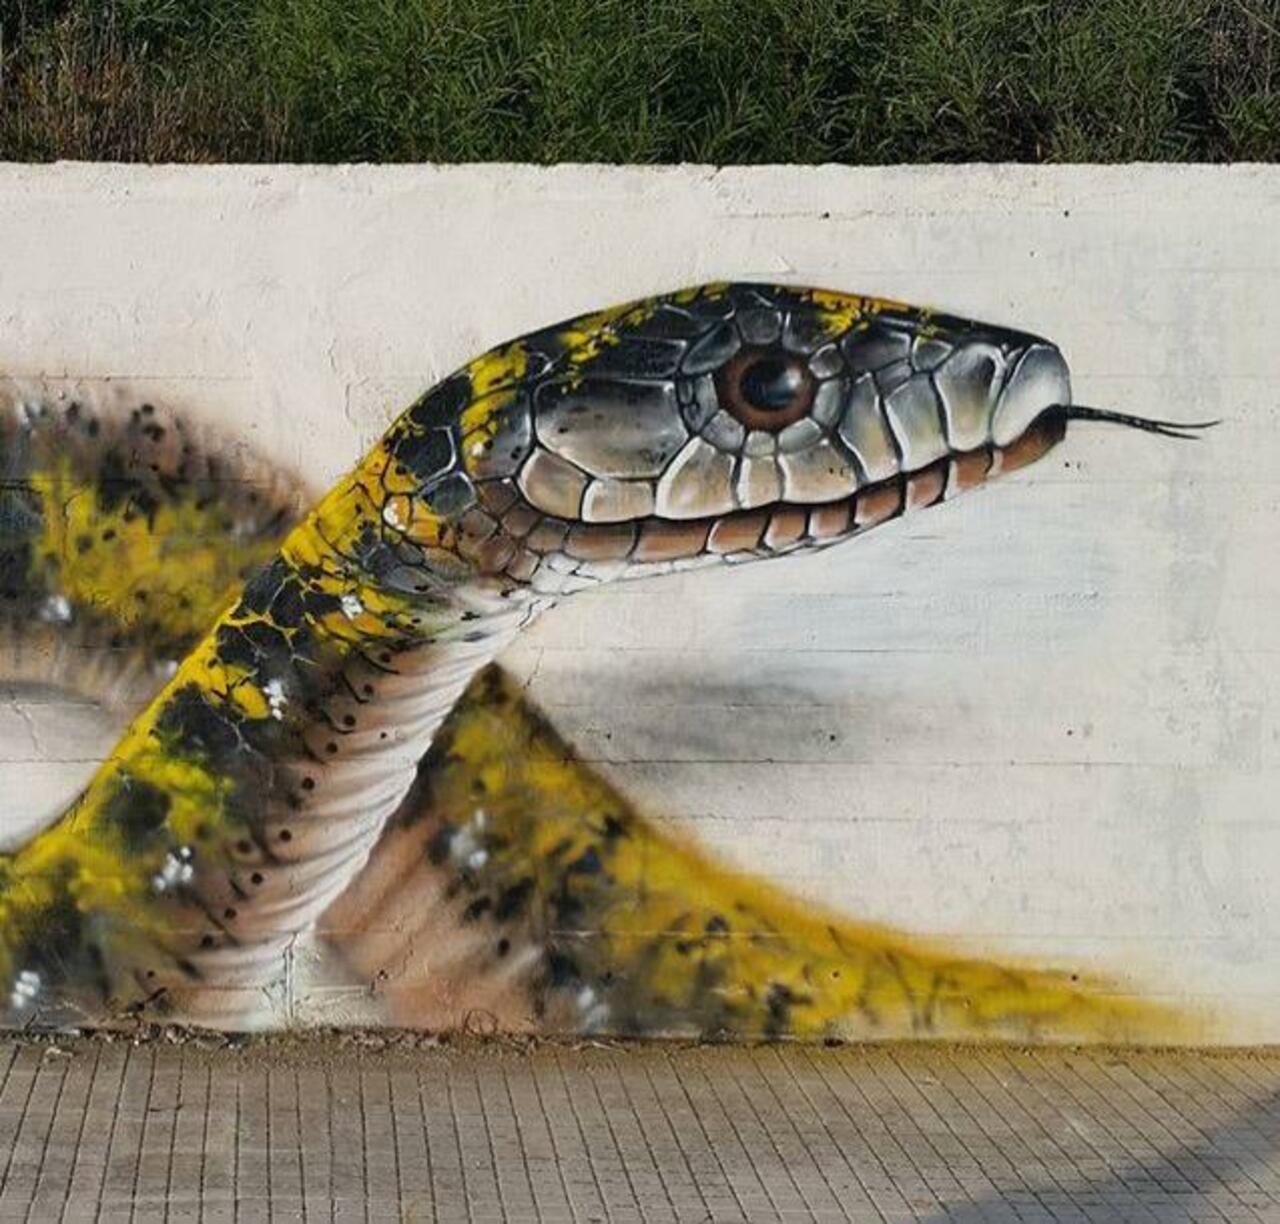 Street Art by Cosimocheone 

#art #graffiti #mural #streetart http://t.co/Sl8u1goPzh